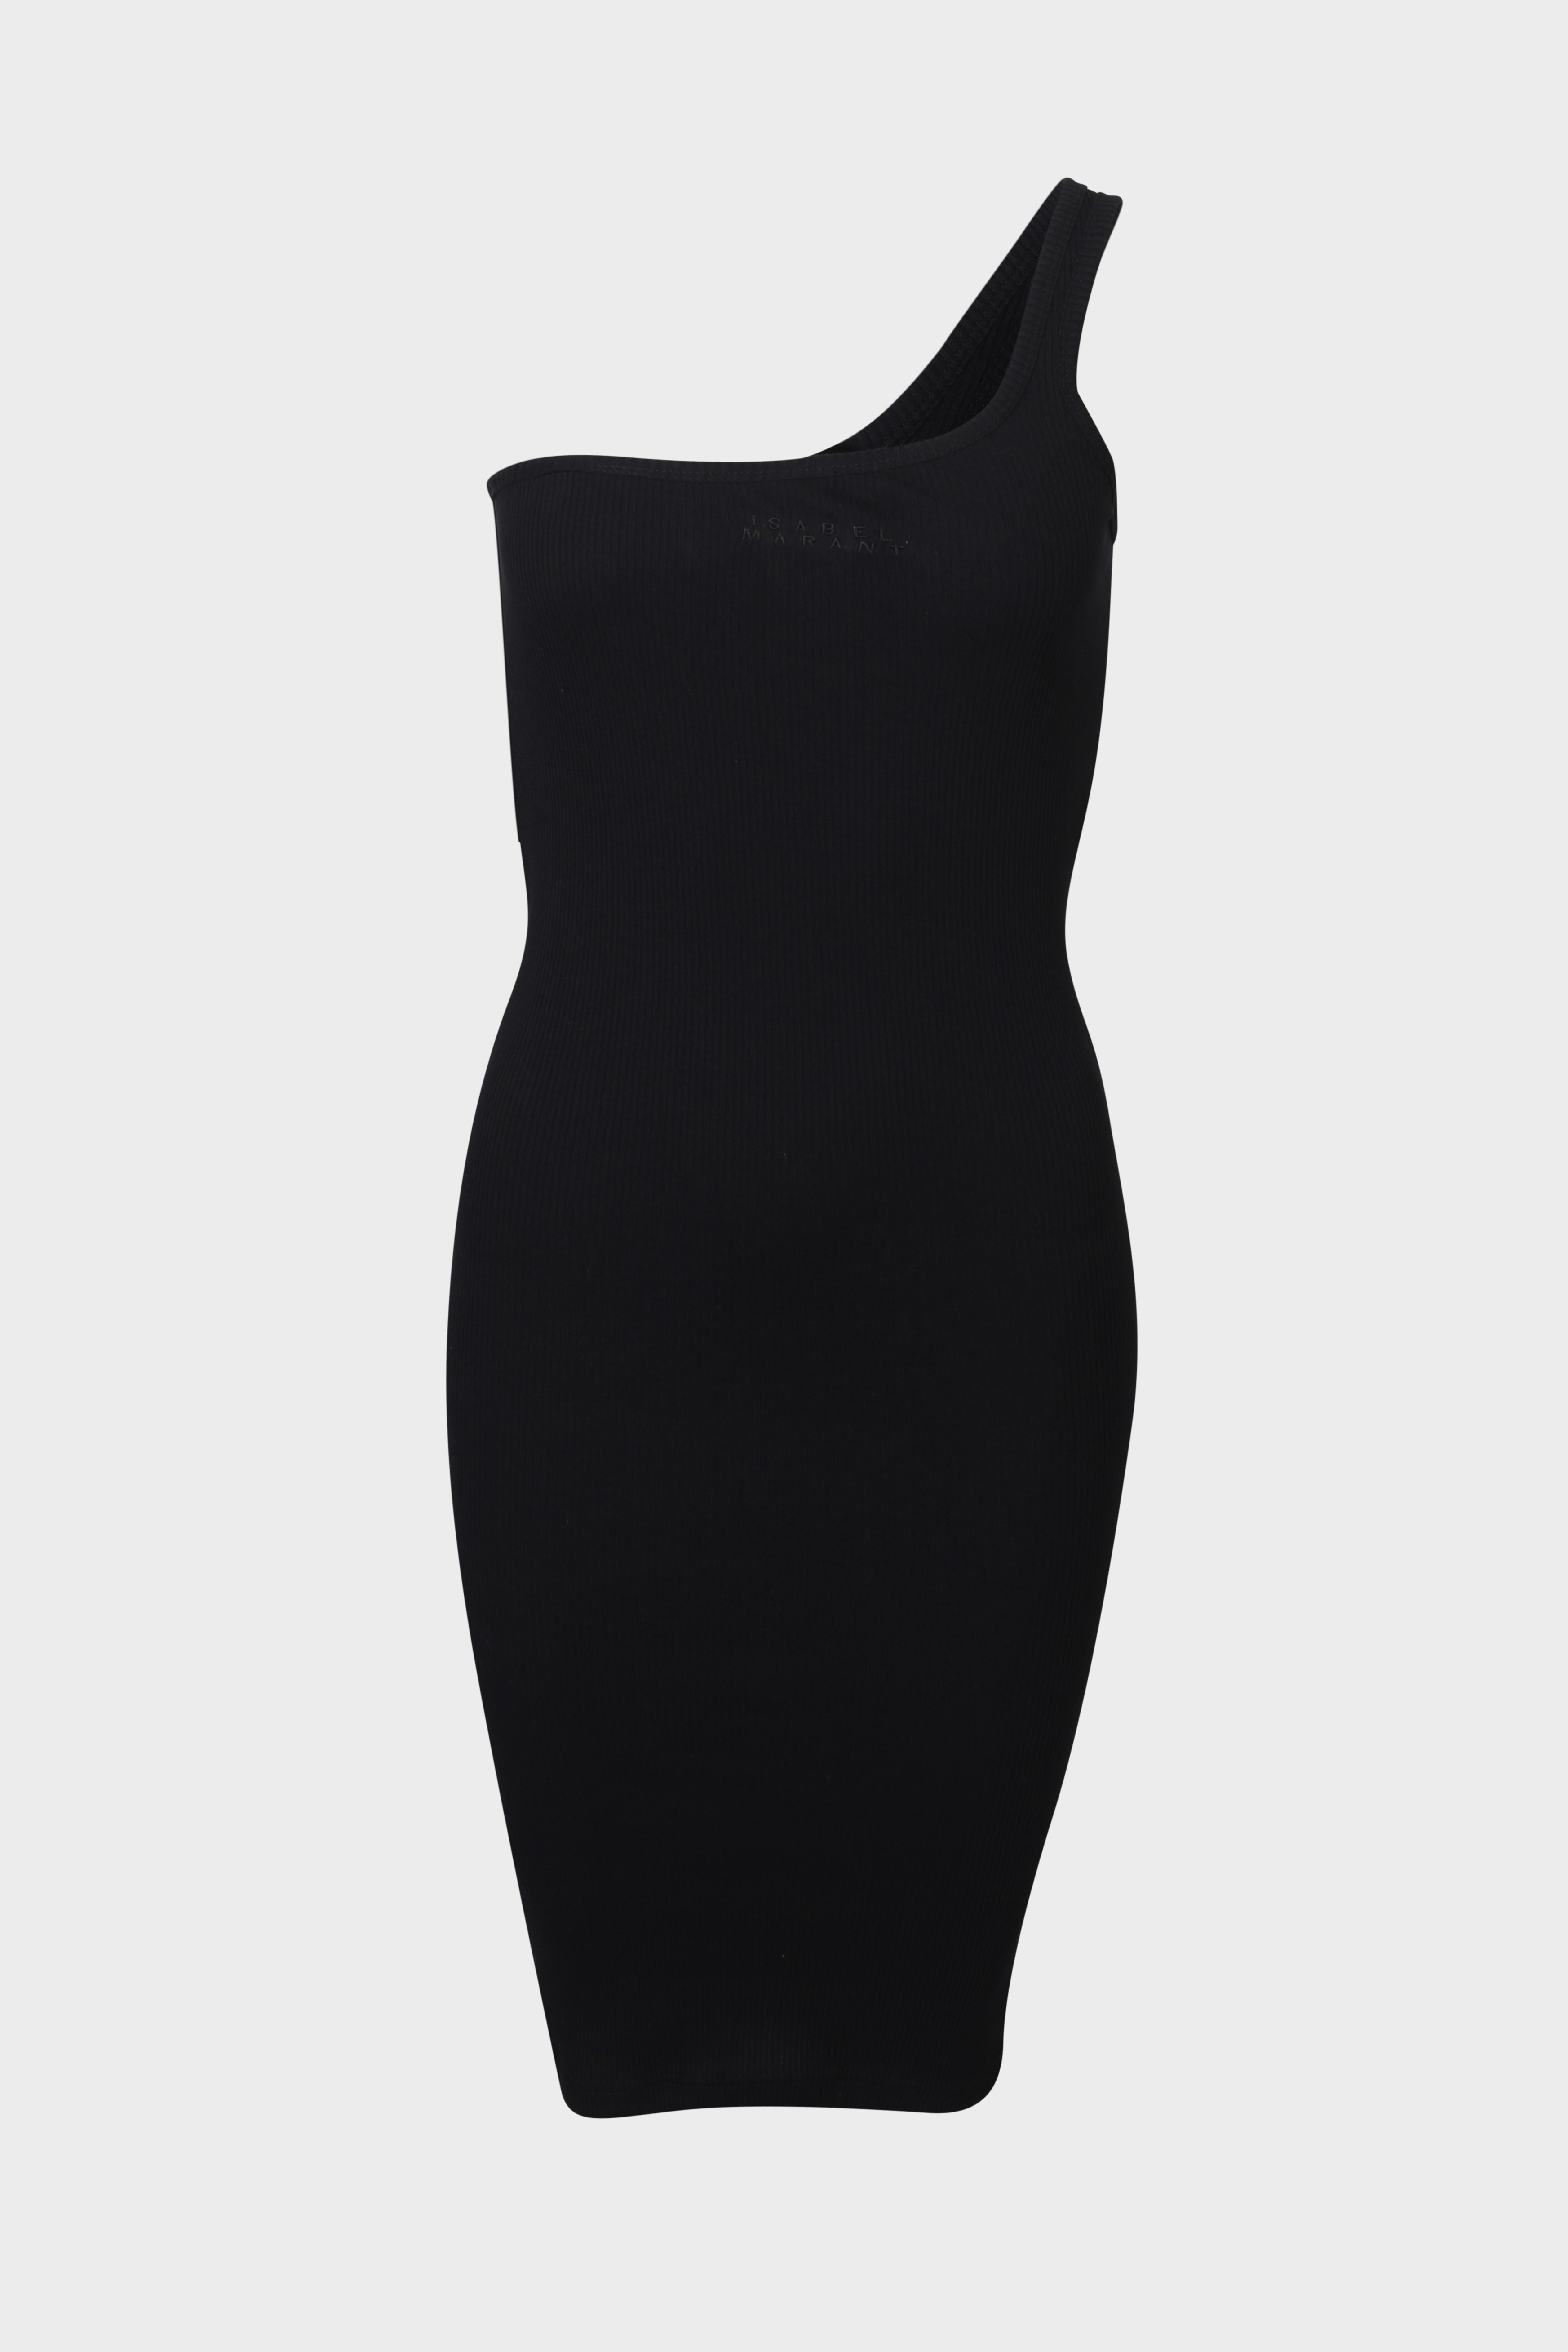 ISABEL MARANT ÉTOILE Tamaki Dress in Black S